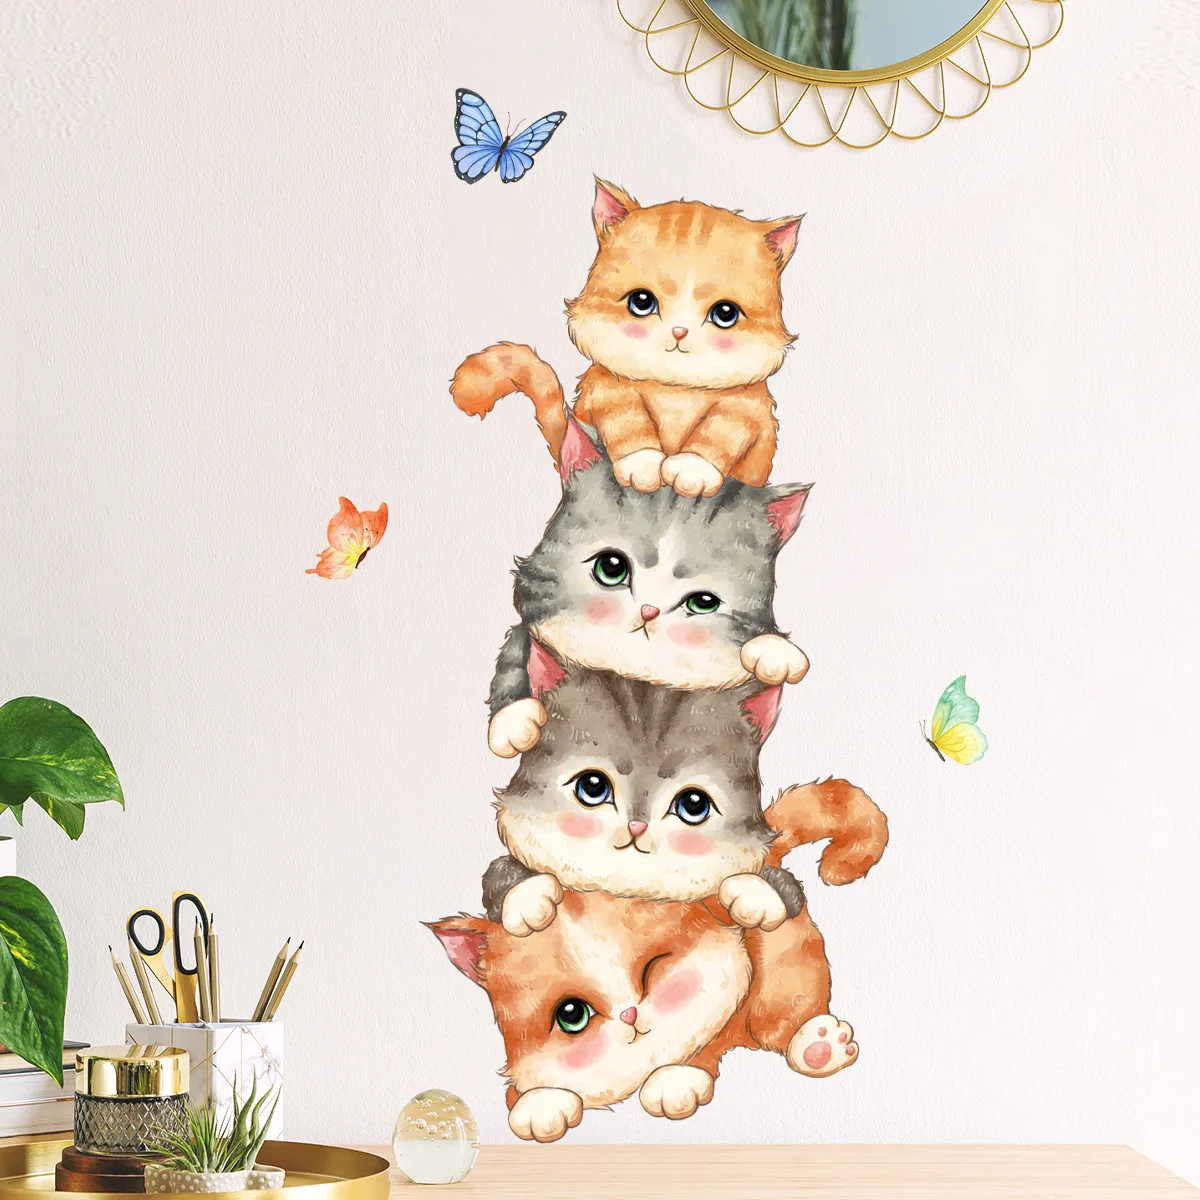 

Cartoon Animal Kitten Butterfly Kindergarten Pvc Material Self-Adhesive Wall Stickers Wall Decor Home Accessories Wallpaper